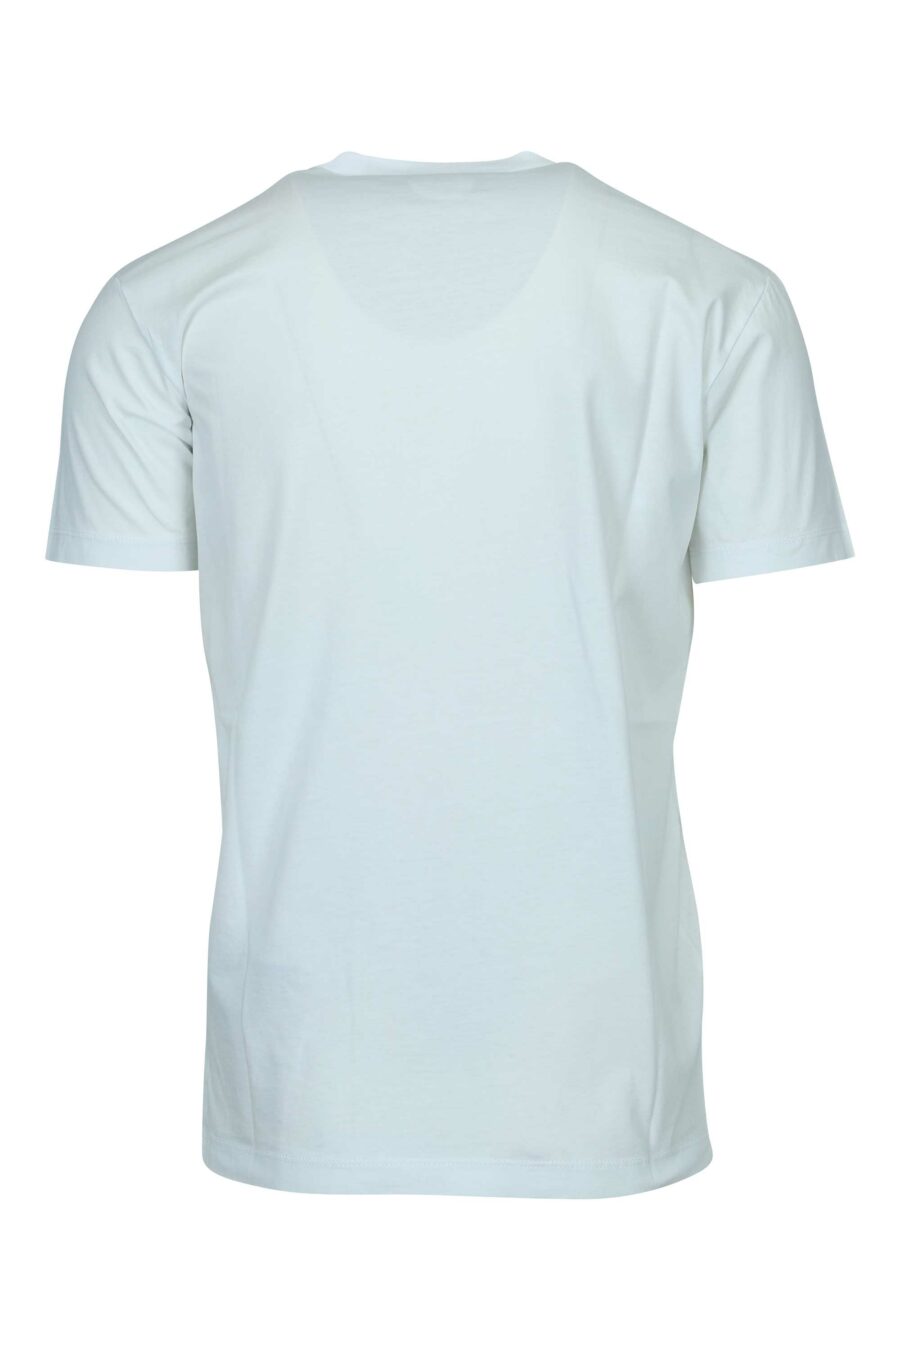 T-shirt branca com maxilogo retro multicolorido - 8054148447434 1 2